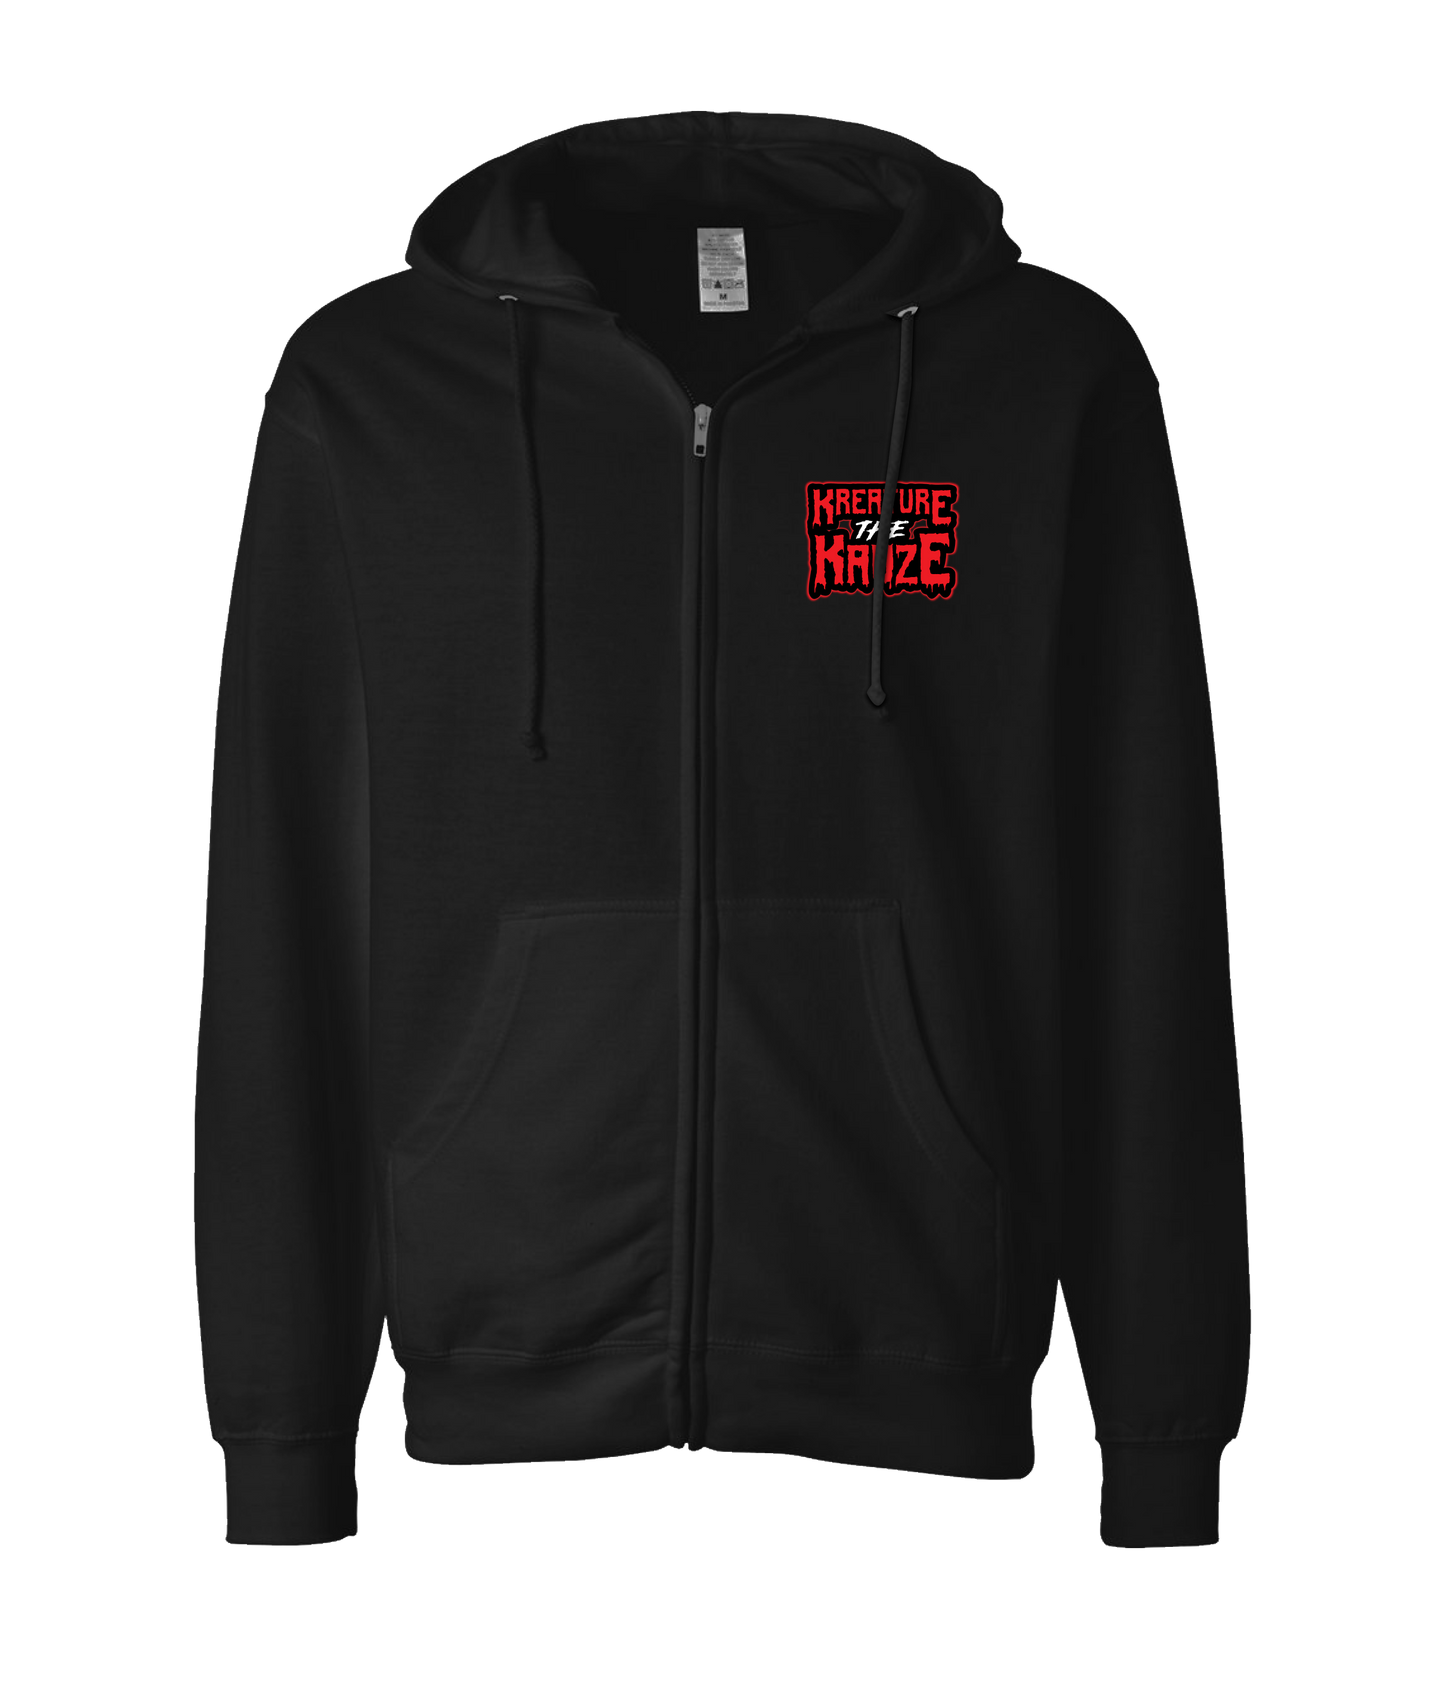 KREATURE AKA KREATURE THE KAUZE - Logo - Black Zip Up Hoodie